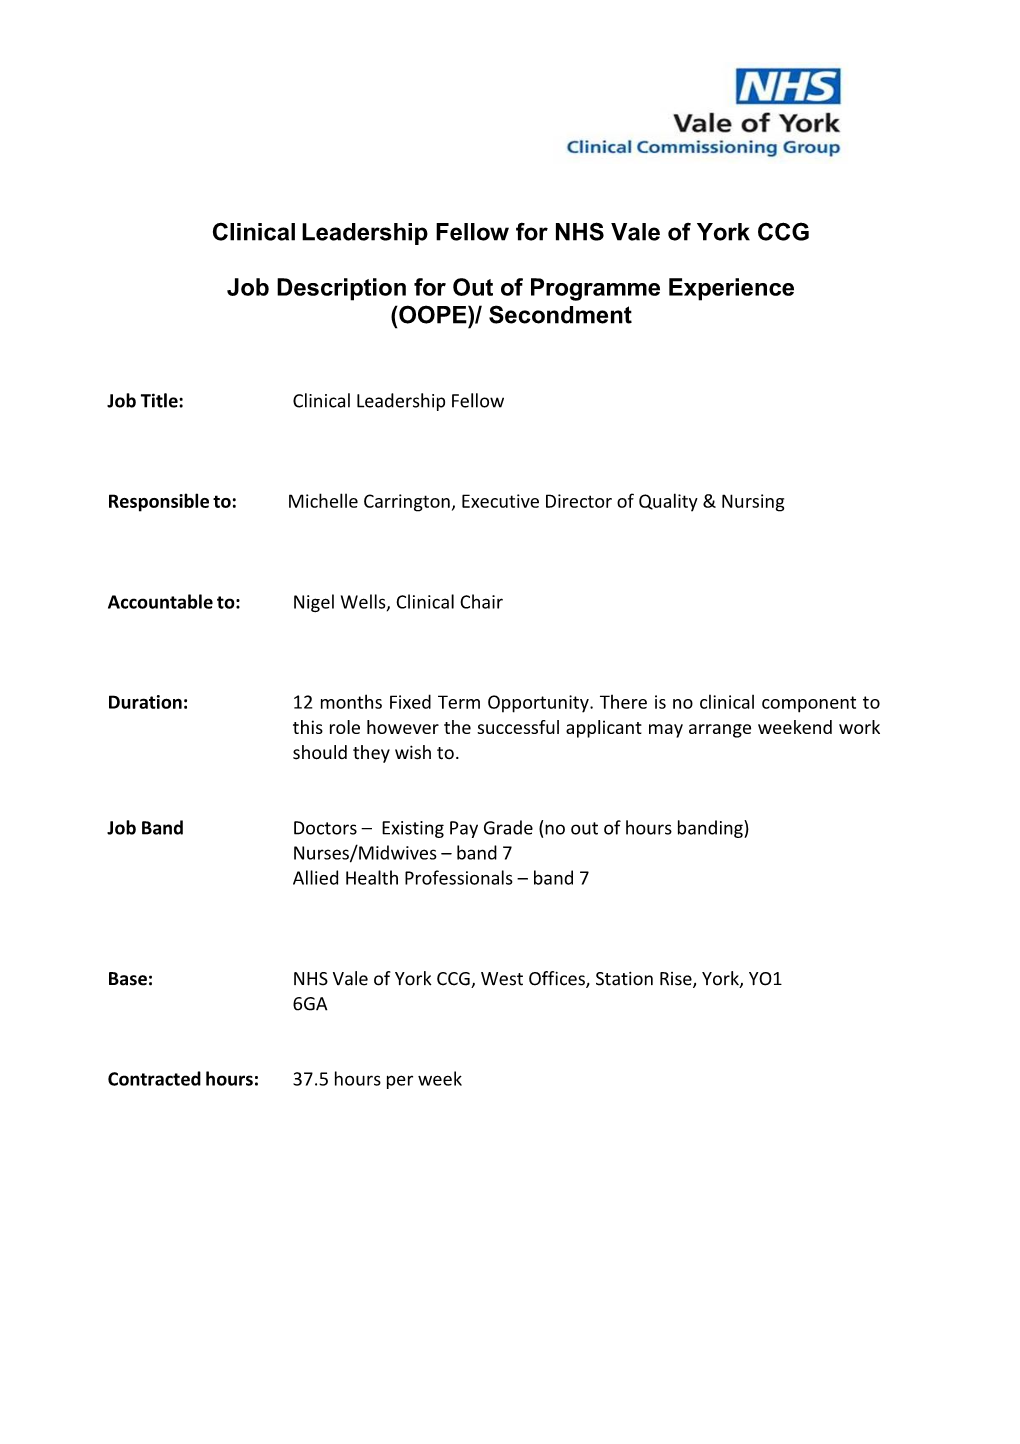 Clinical Leadership Fellow for NHS Vale of York CCG Job Description